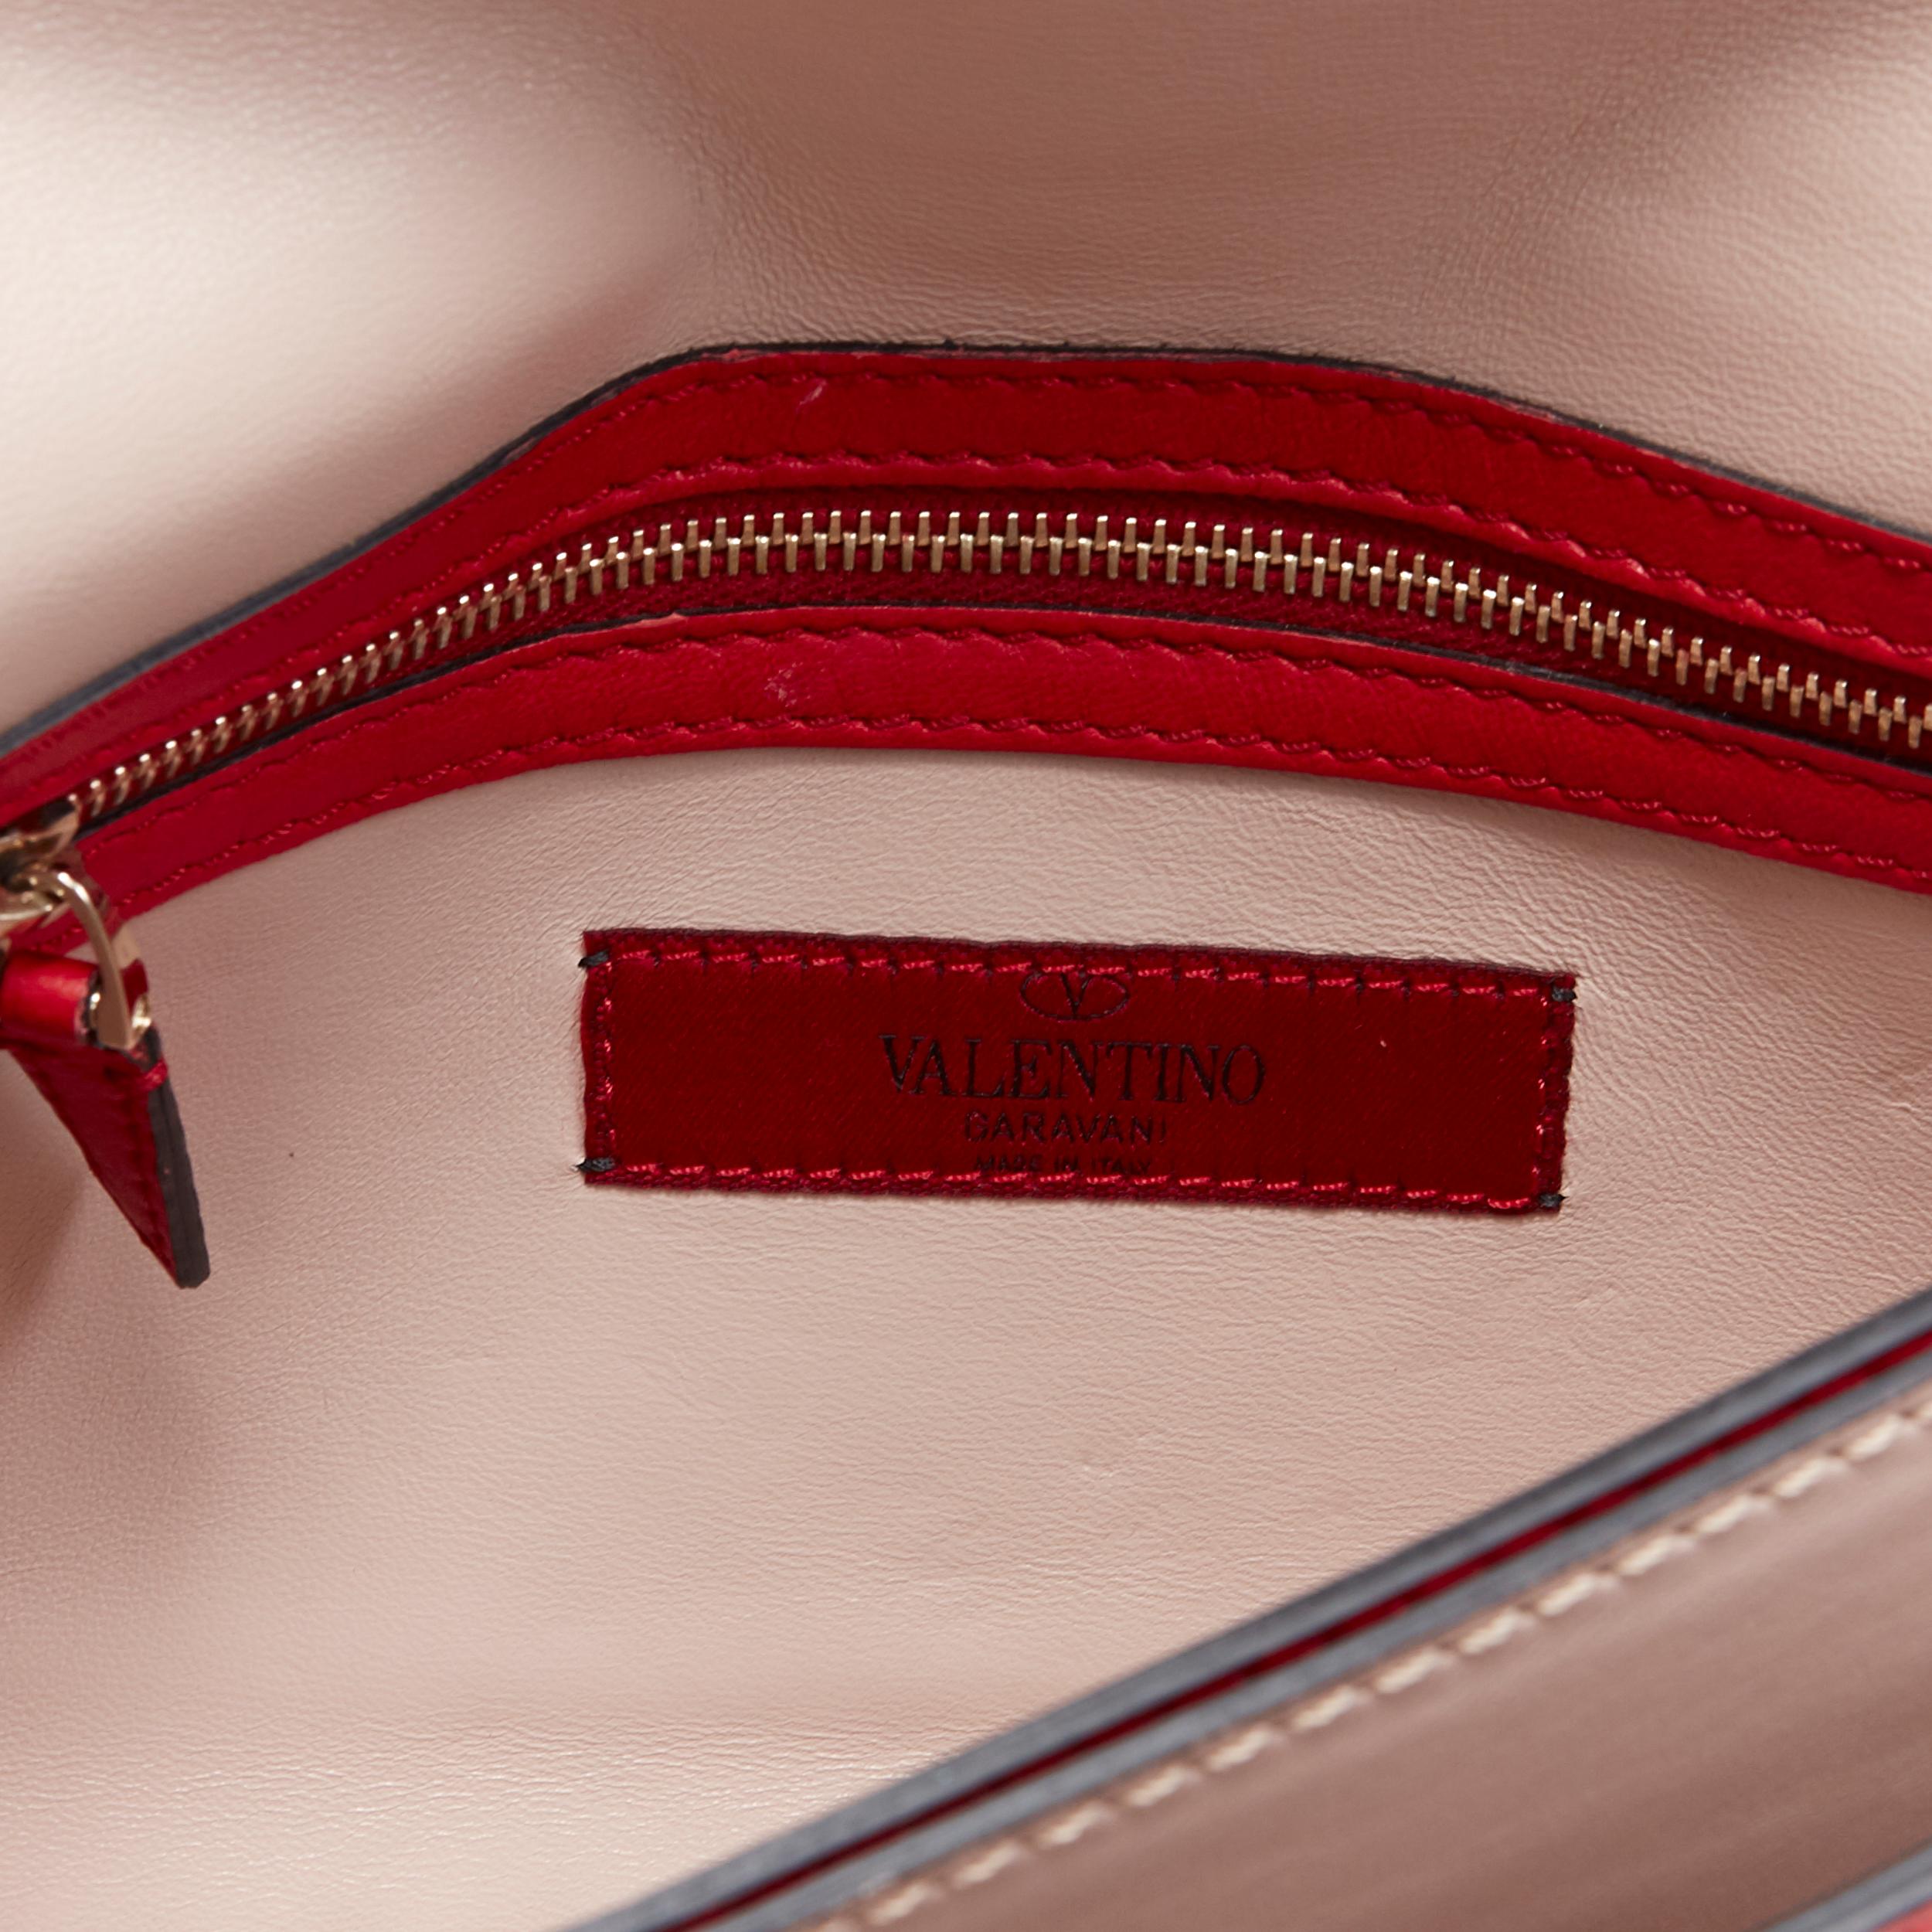 VALENTINO Rockstud red leather gold studded bordered wristlet flap clutch bag 5